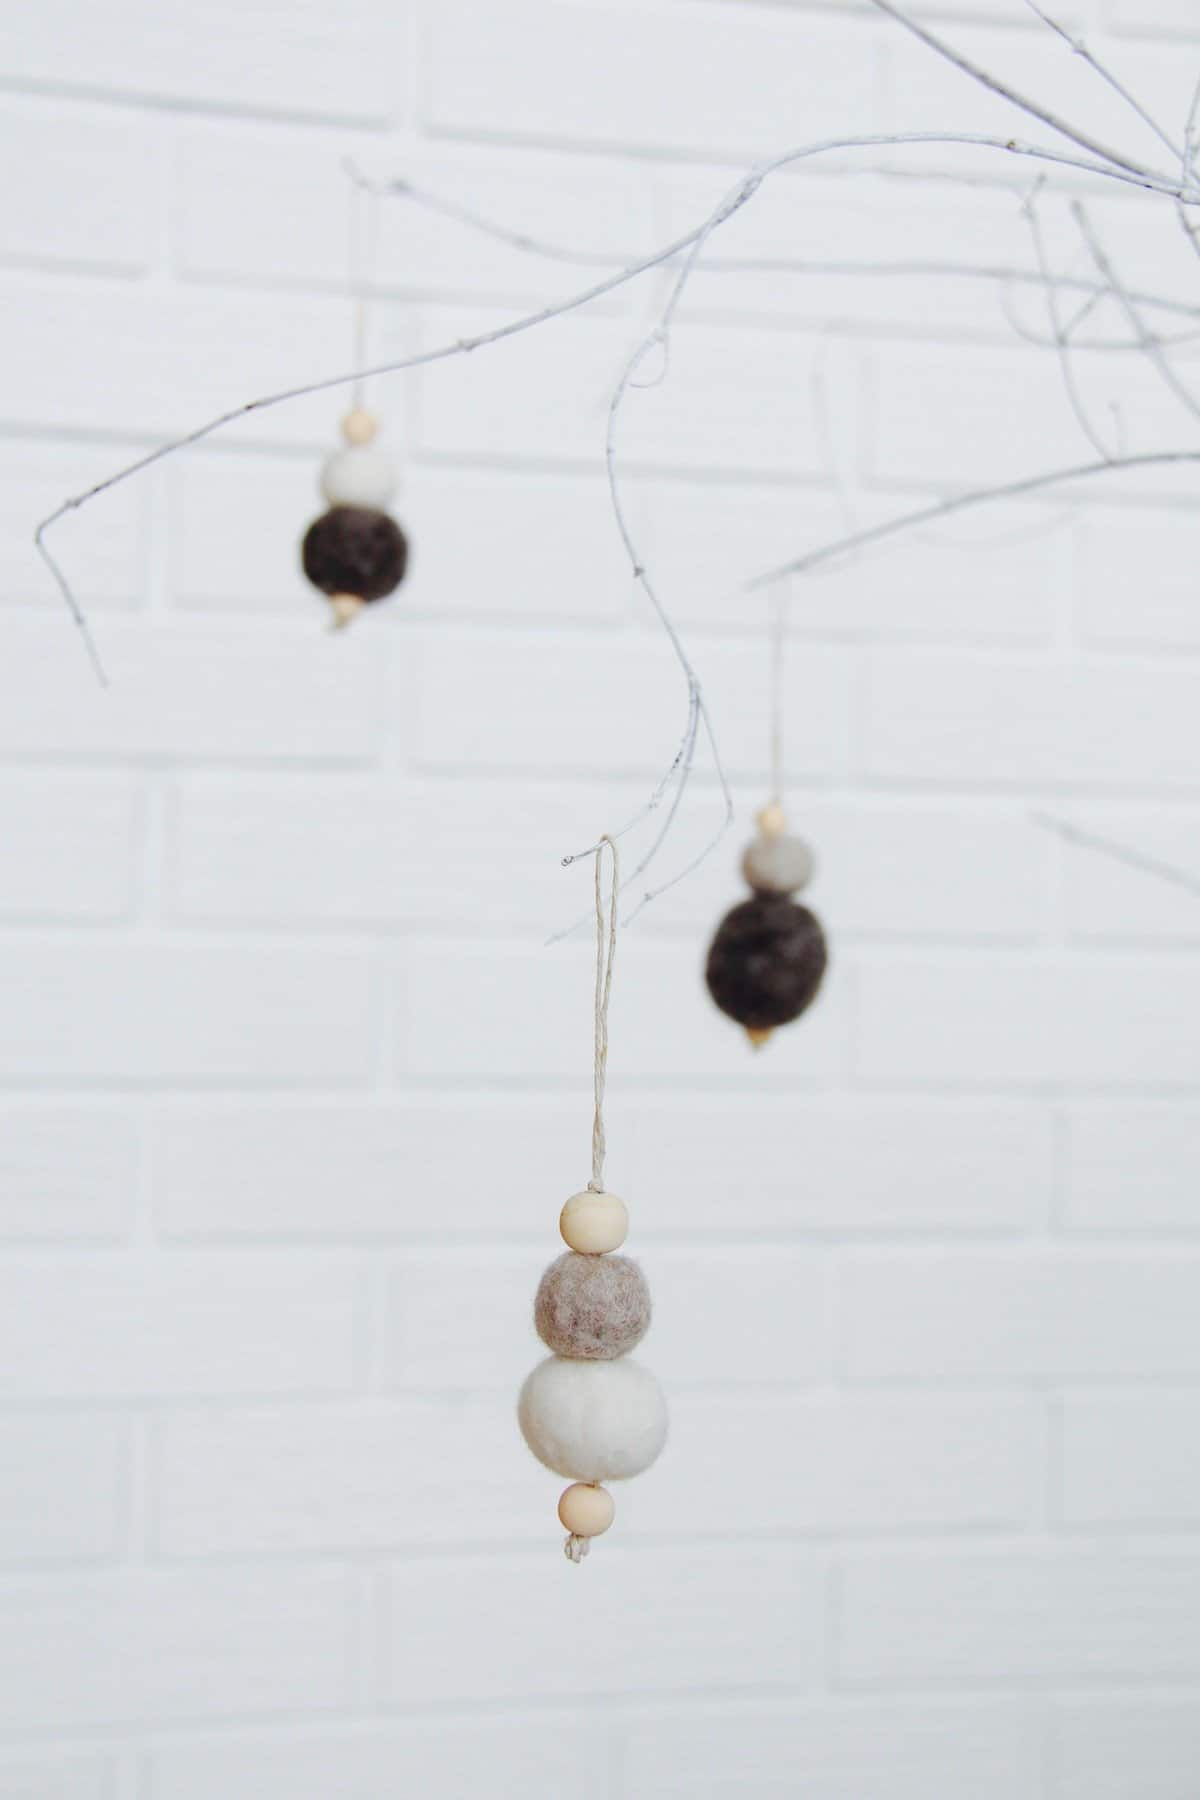 minimalist felt ball ornament with wooden beads